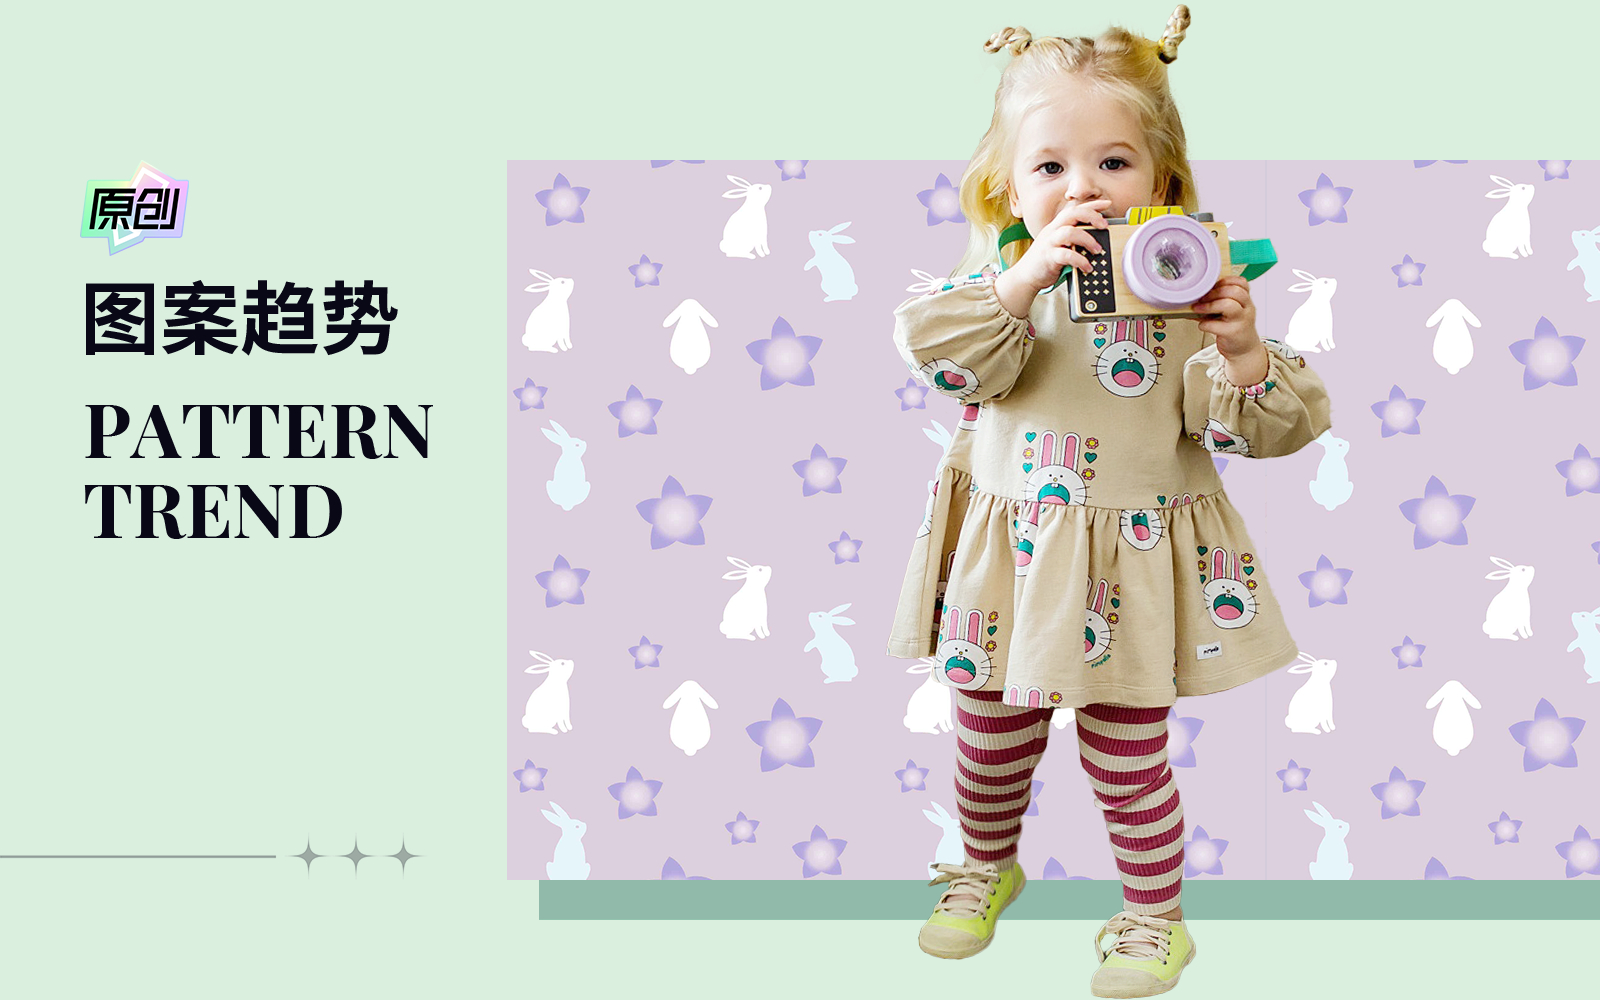 Auspicious Rabbit -- The Festive Pattern Trend for Kidswear